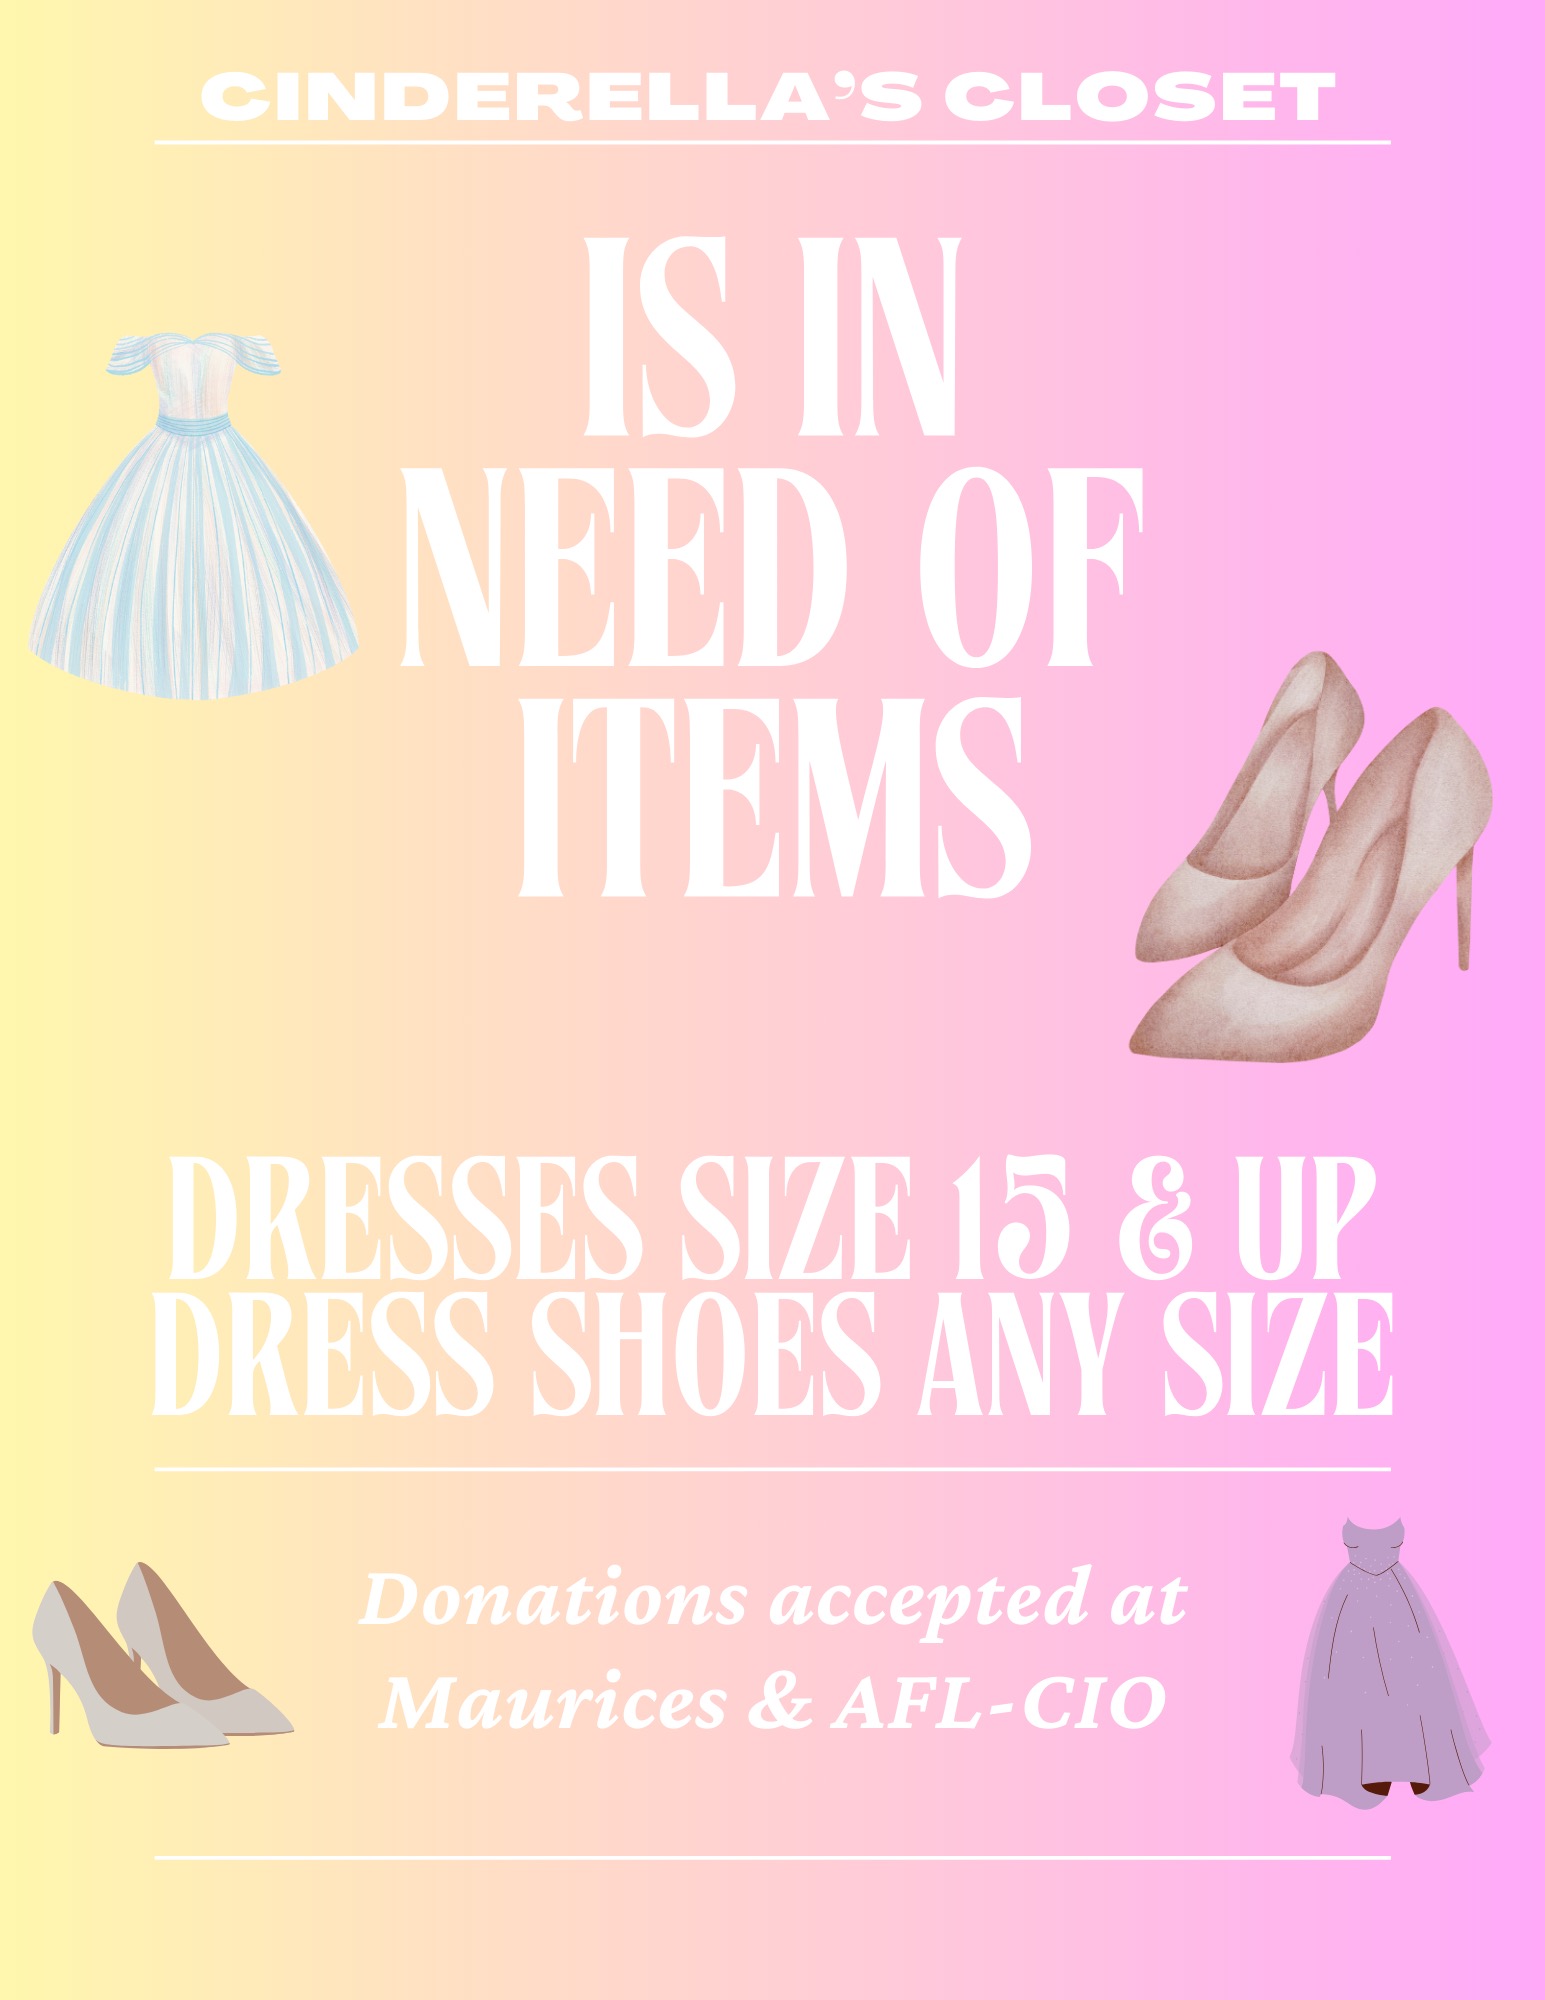 Cinderella’s Closet Needs Donations